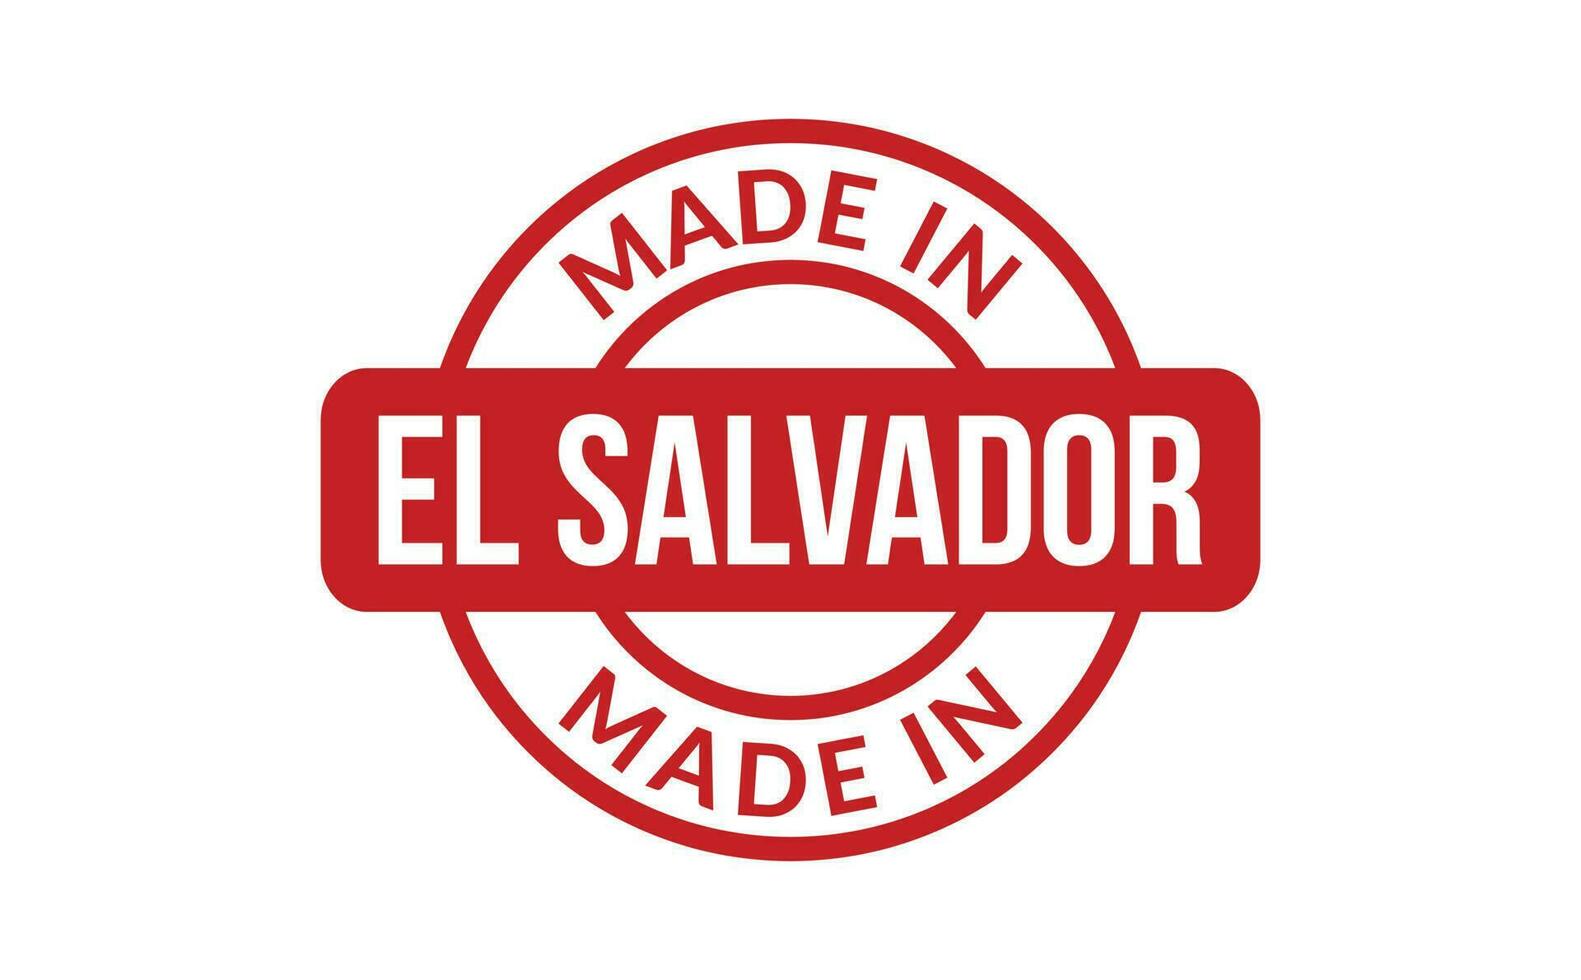 Made In El Salvador Rubber Stamp vector